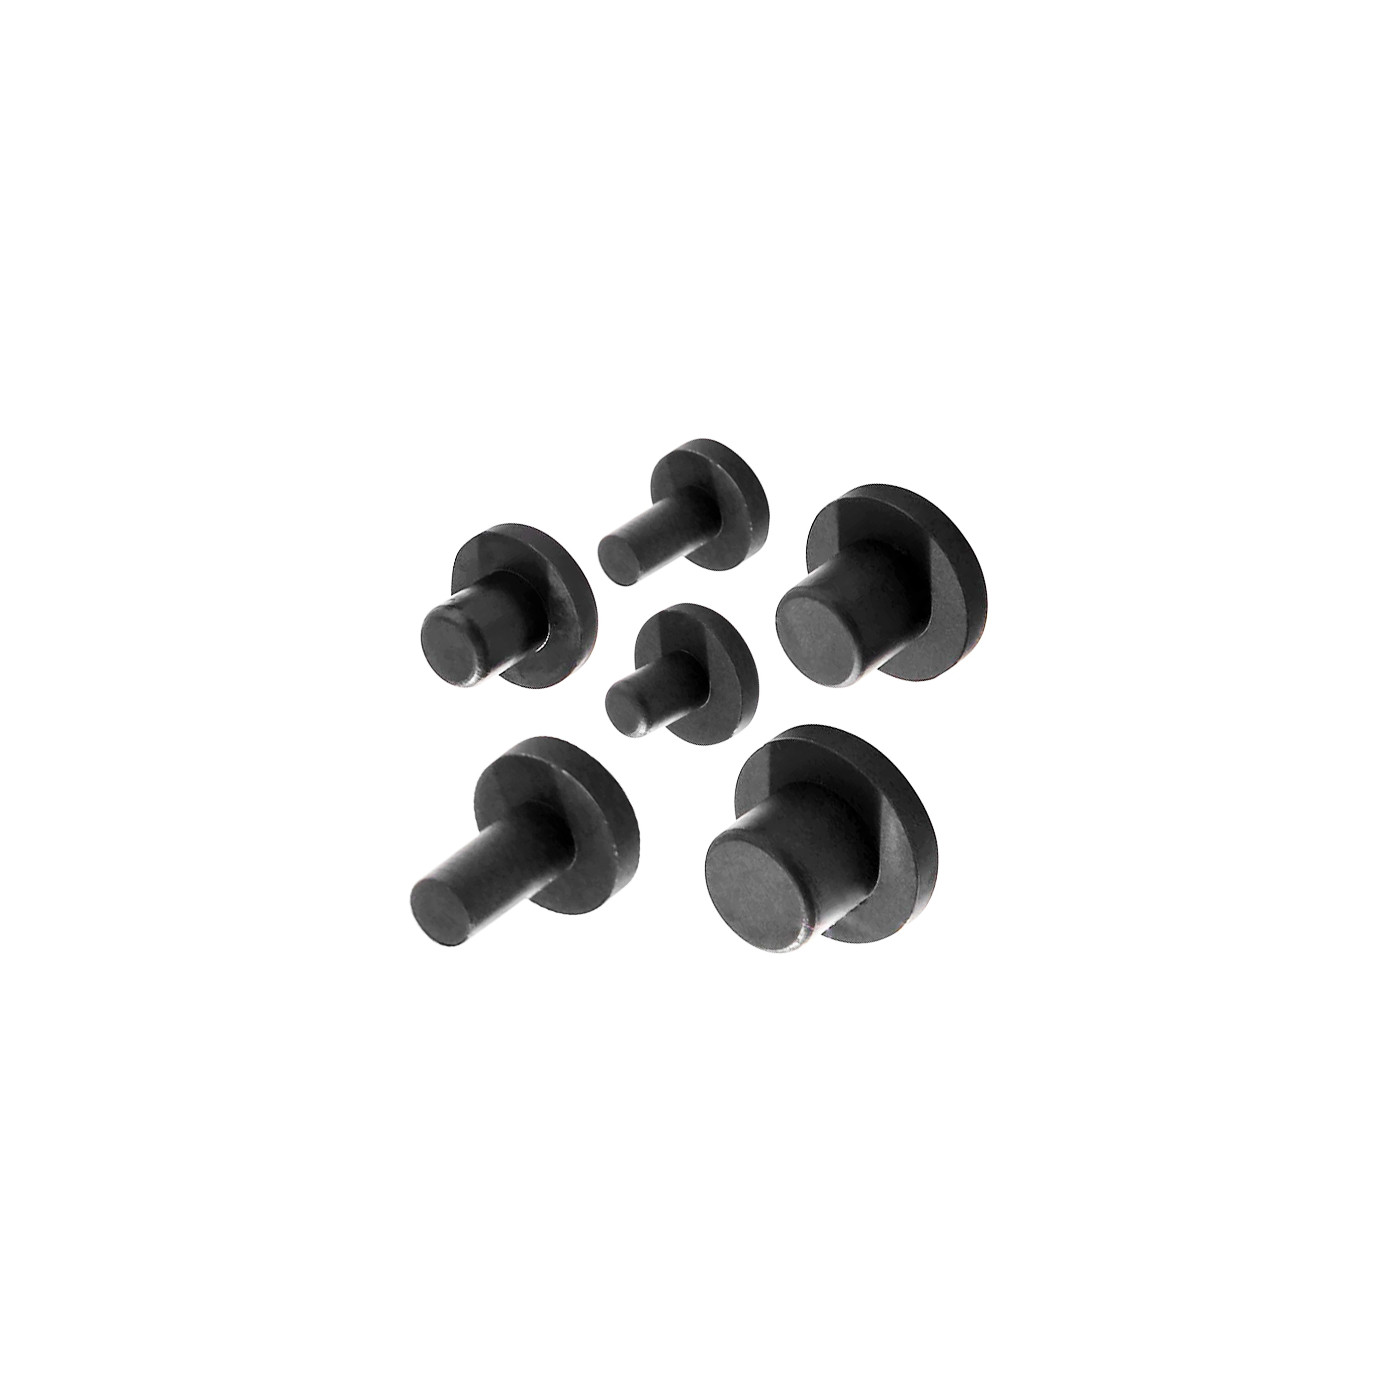 Set of 100 rubber plugs (inside, round, 5.45 mm, black)